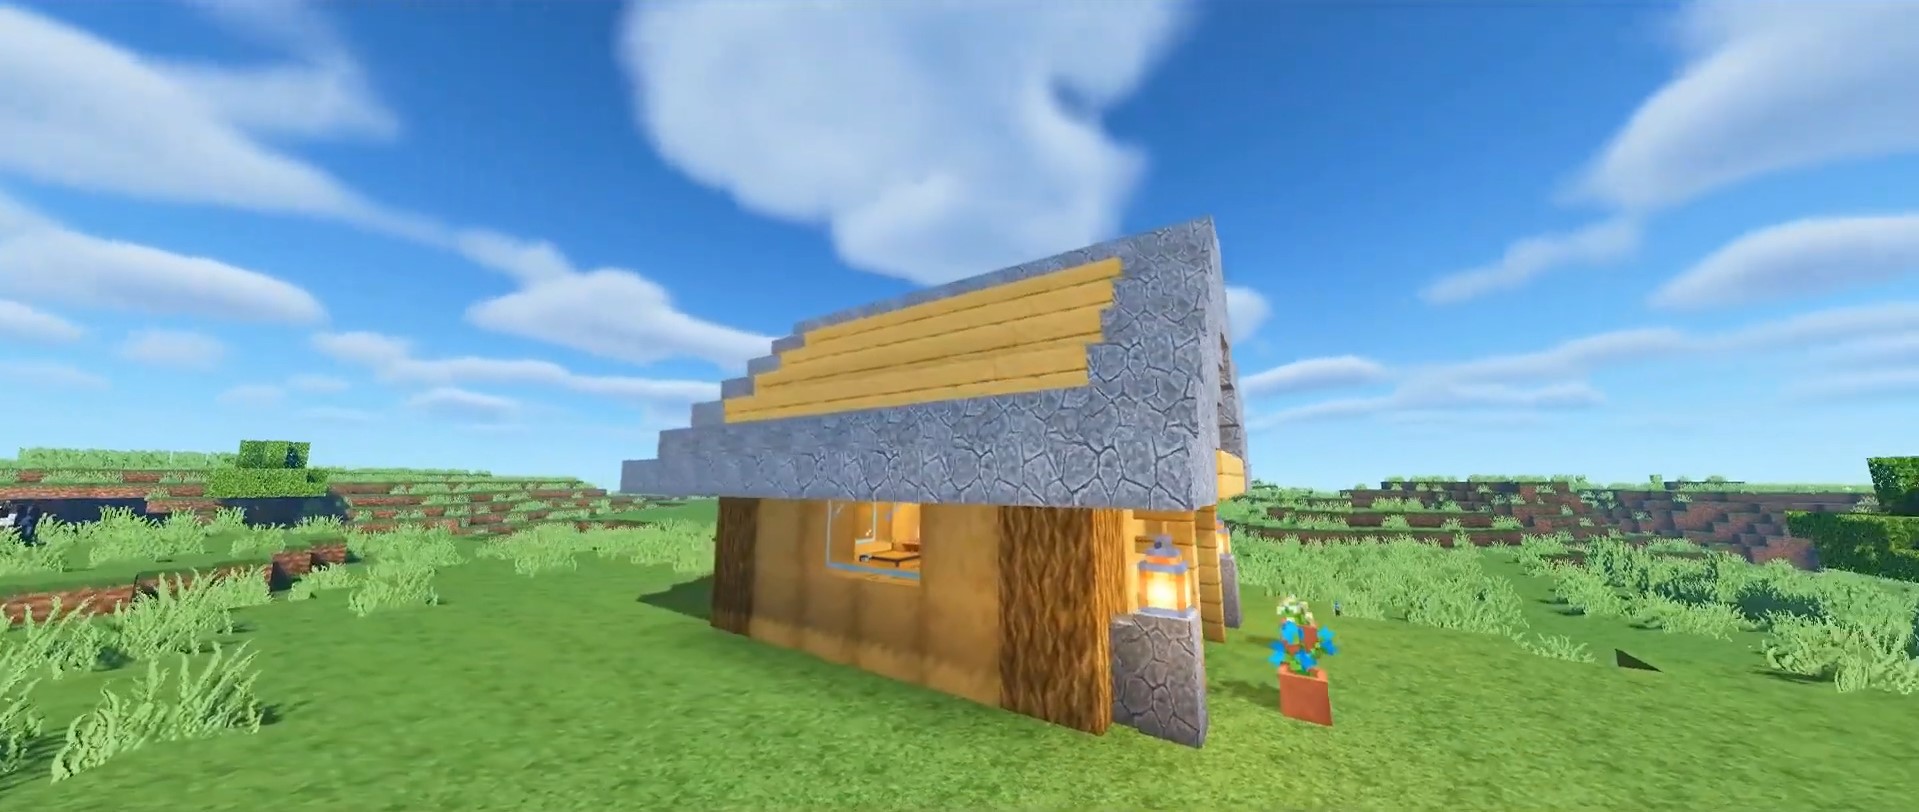 Survival Starter House minecraft building idea